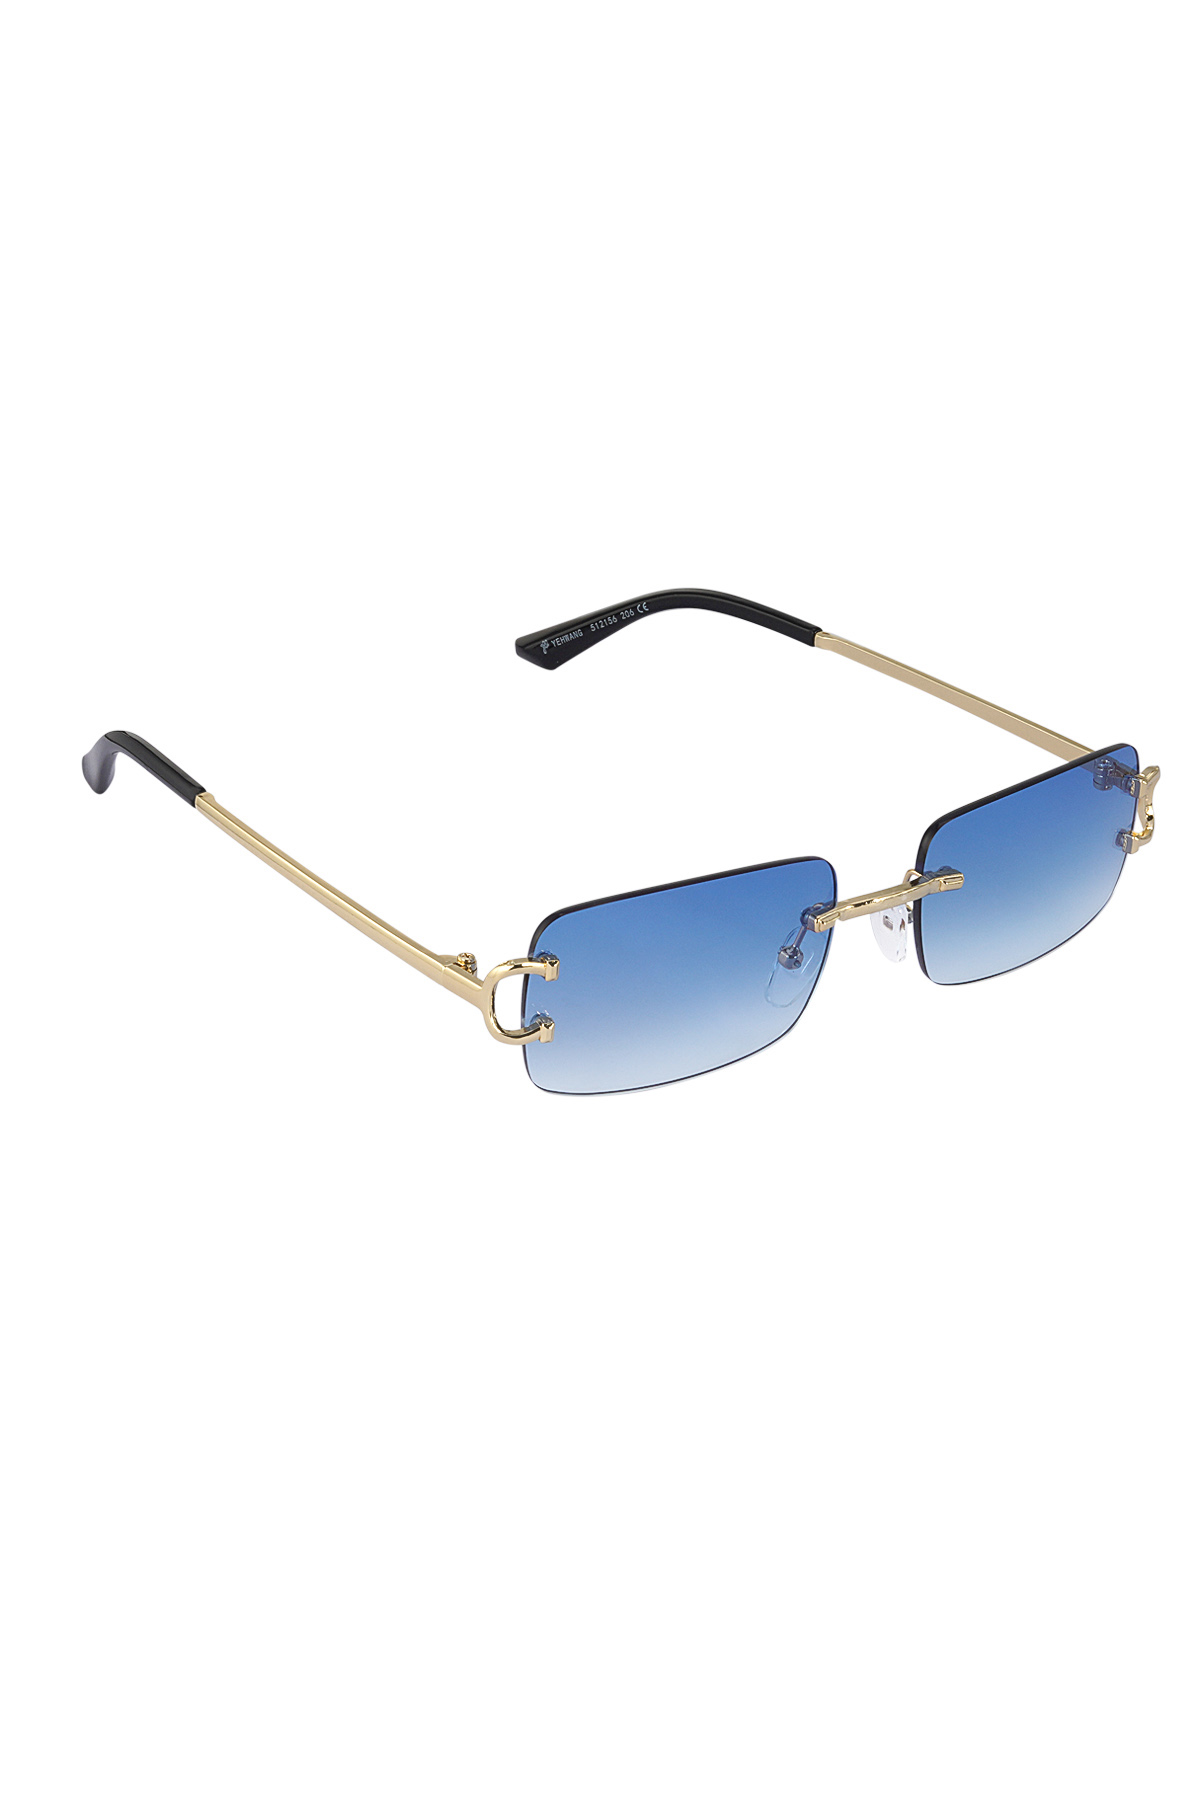 Sunglasses Sunbeam - blue gold